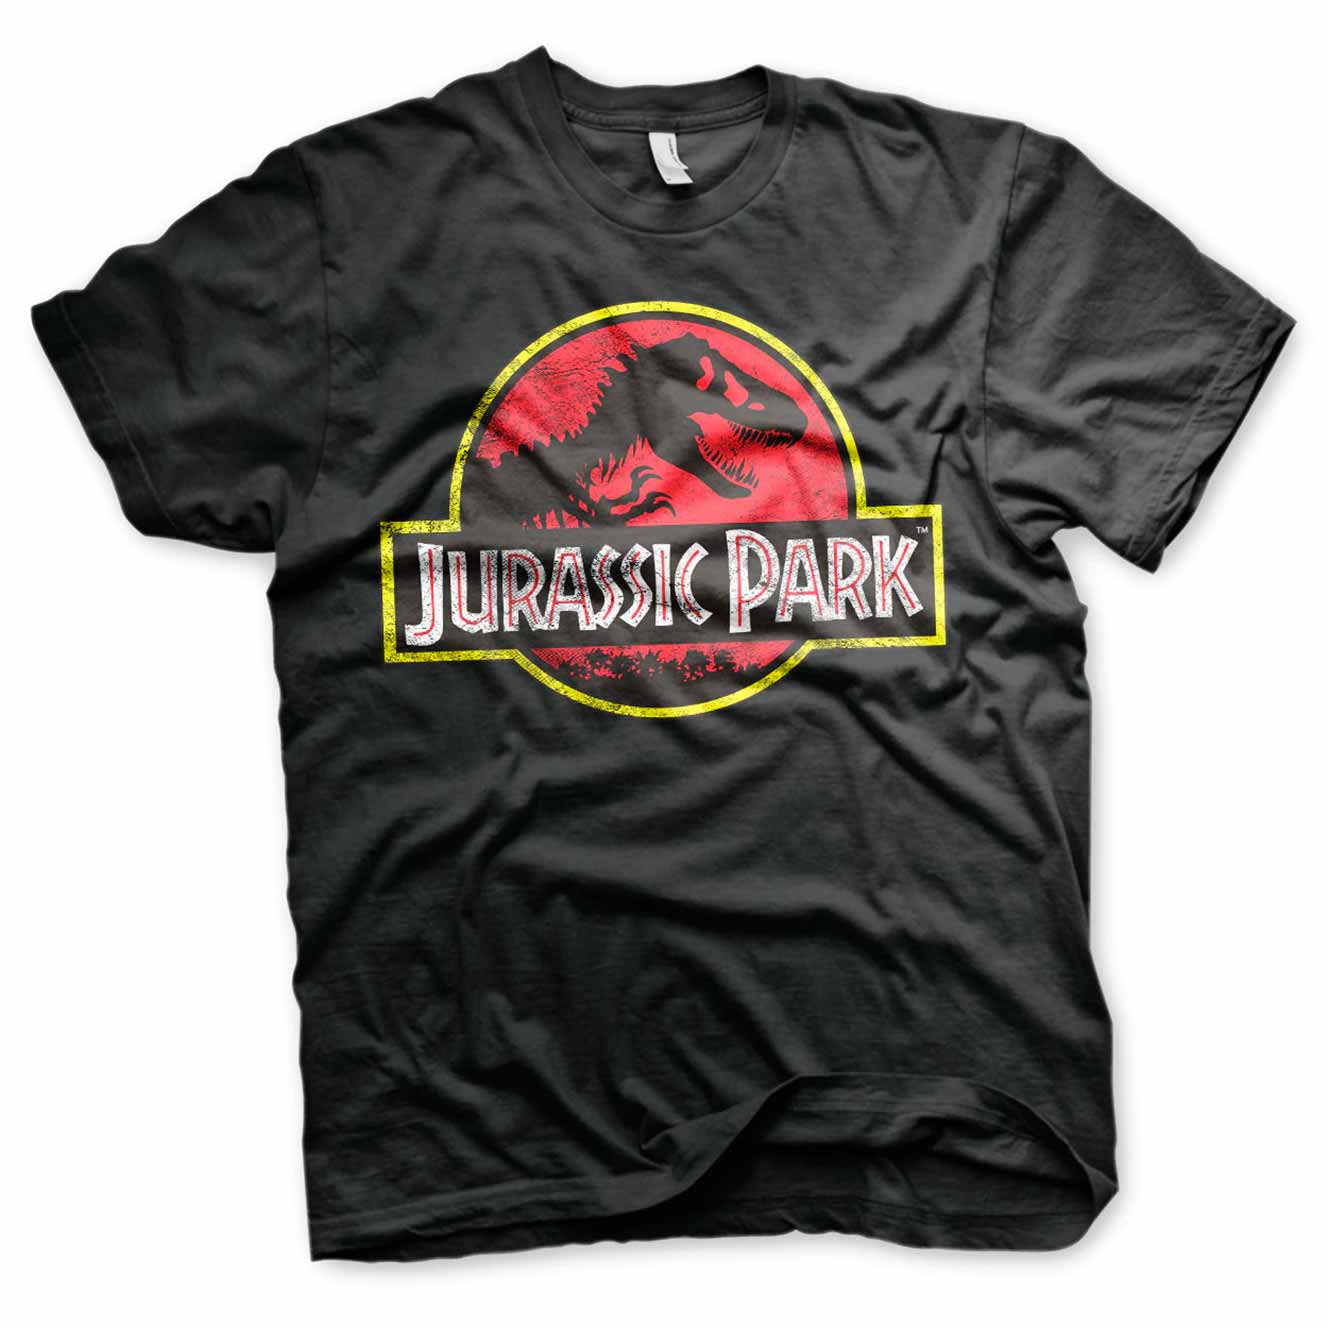 Sort Jurassic Park T-shirt med det klassiske logo trykt på brystet